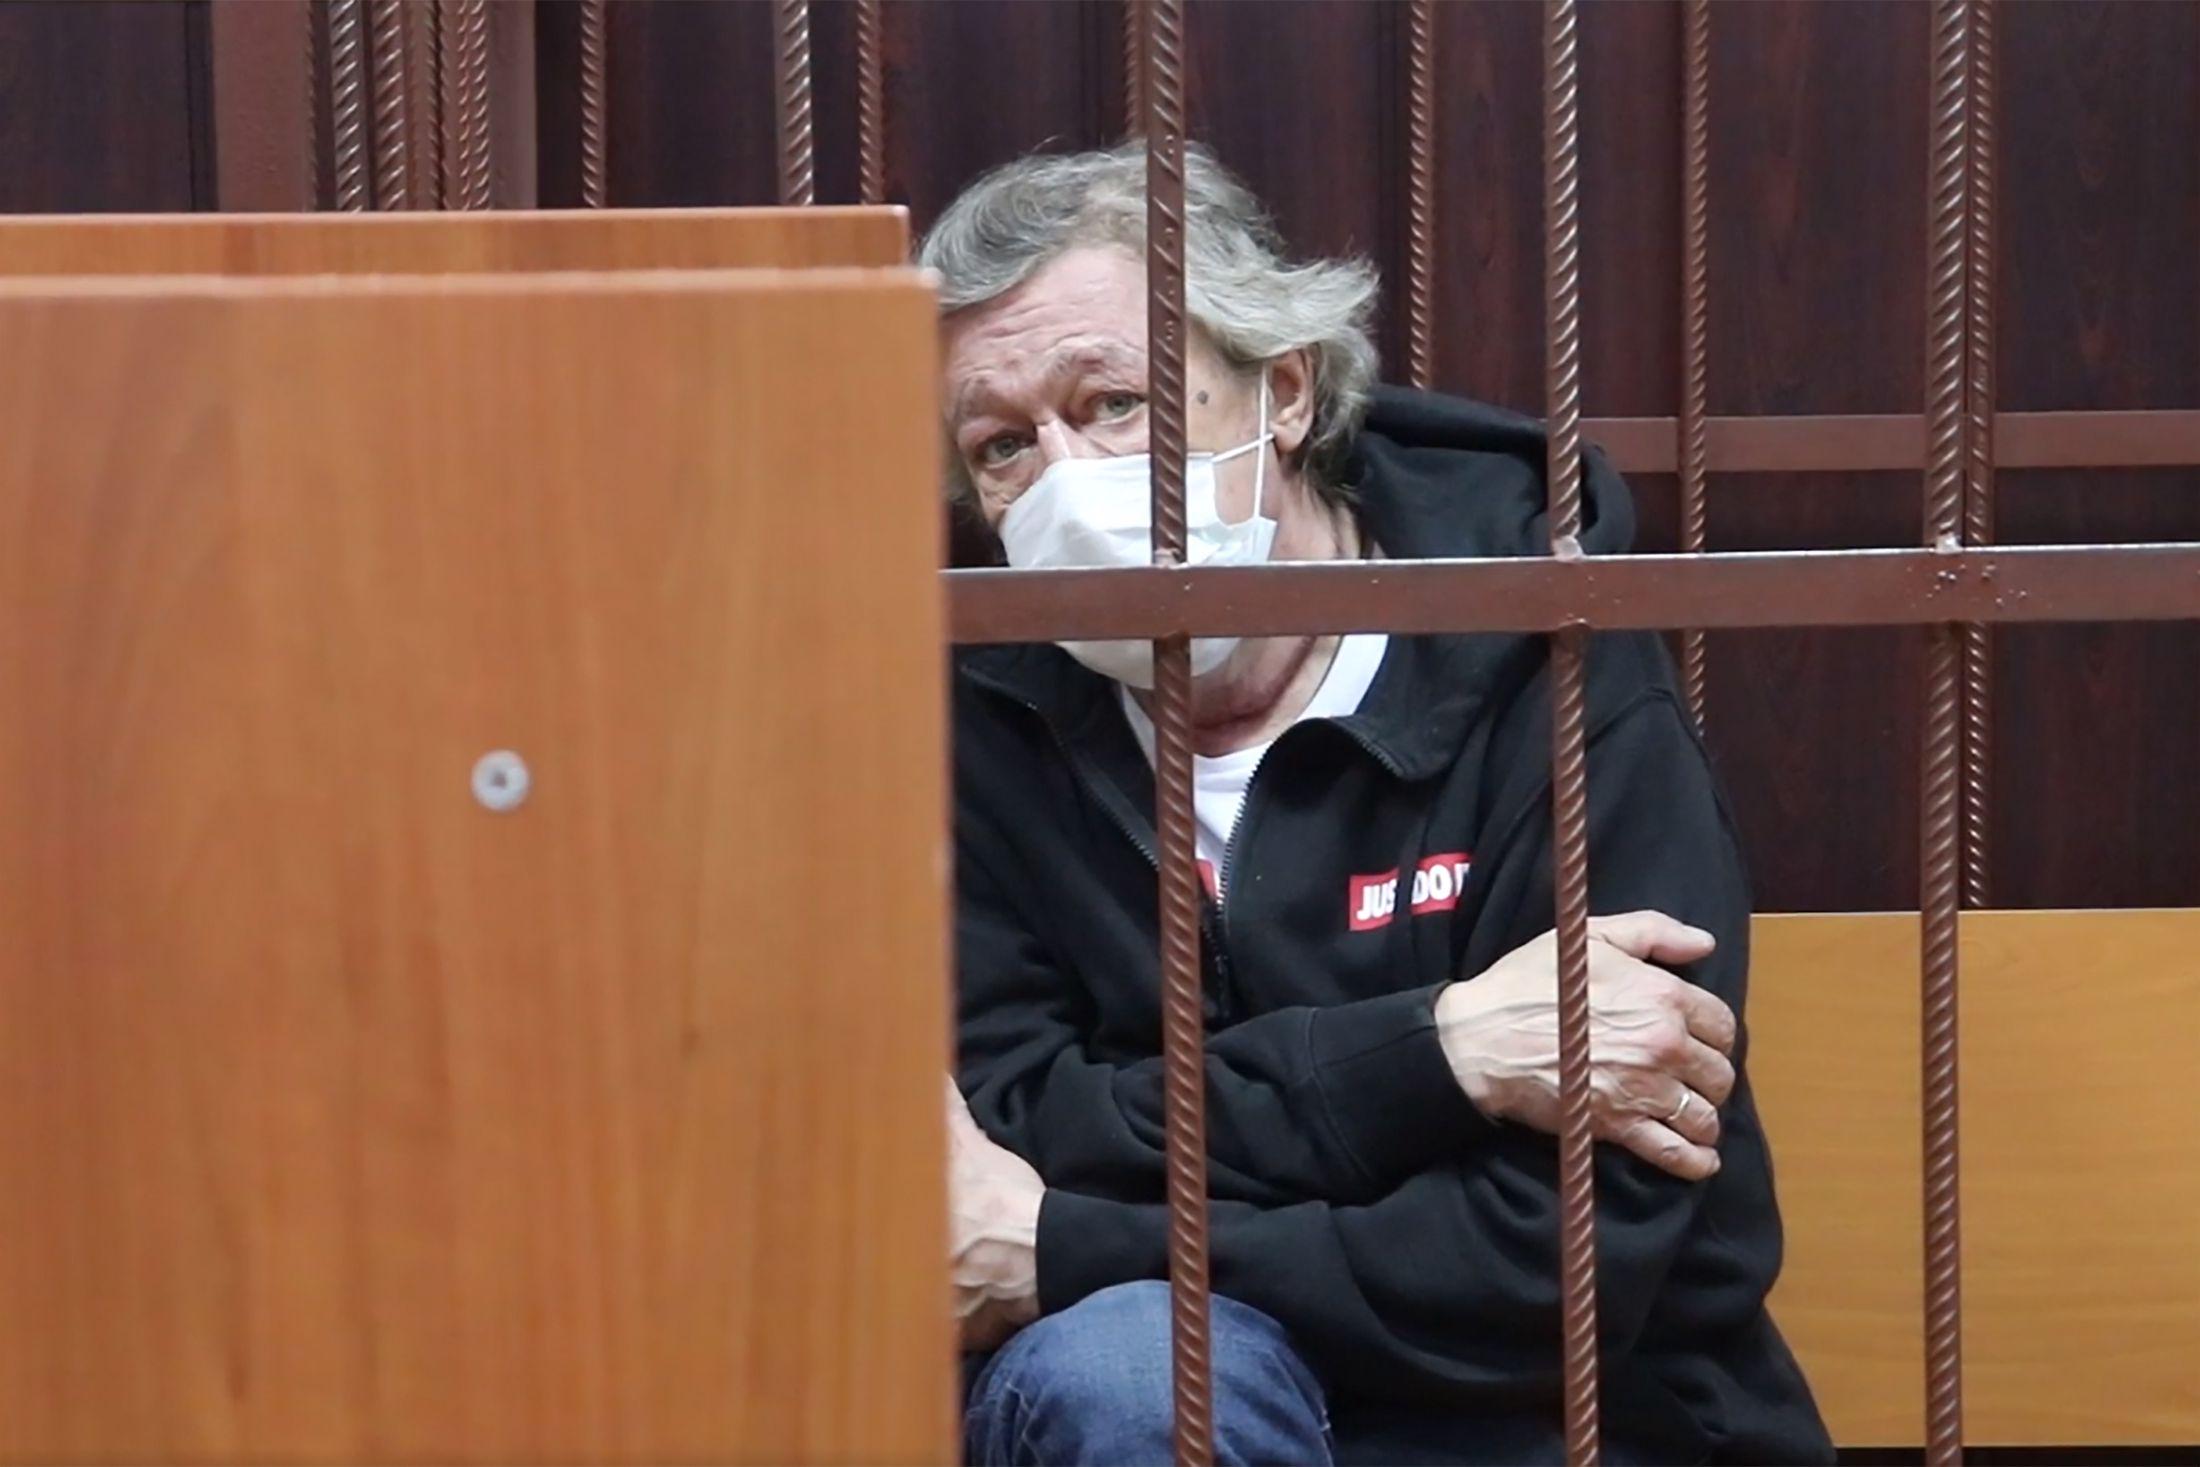 Mash: Михаилу Ефремову отказали в УДО «из-за нарушения режима в колонии». Адвокат: «Документы на УДО еще не подавали»